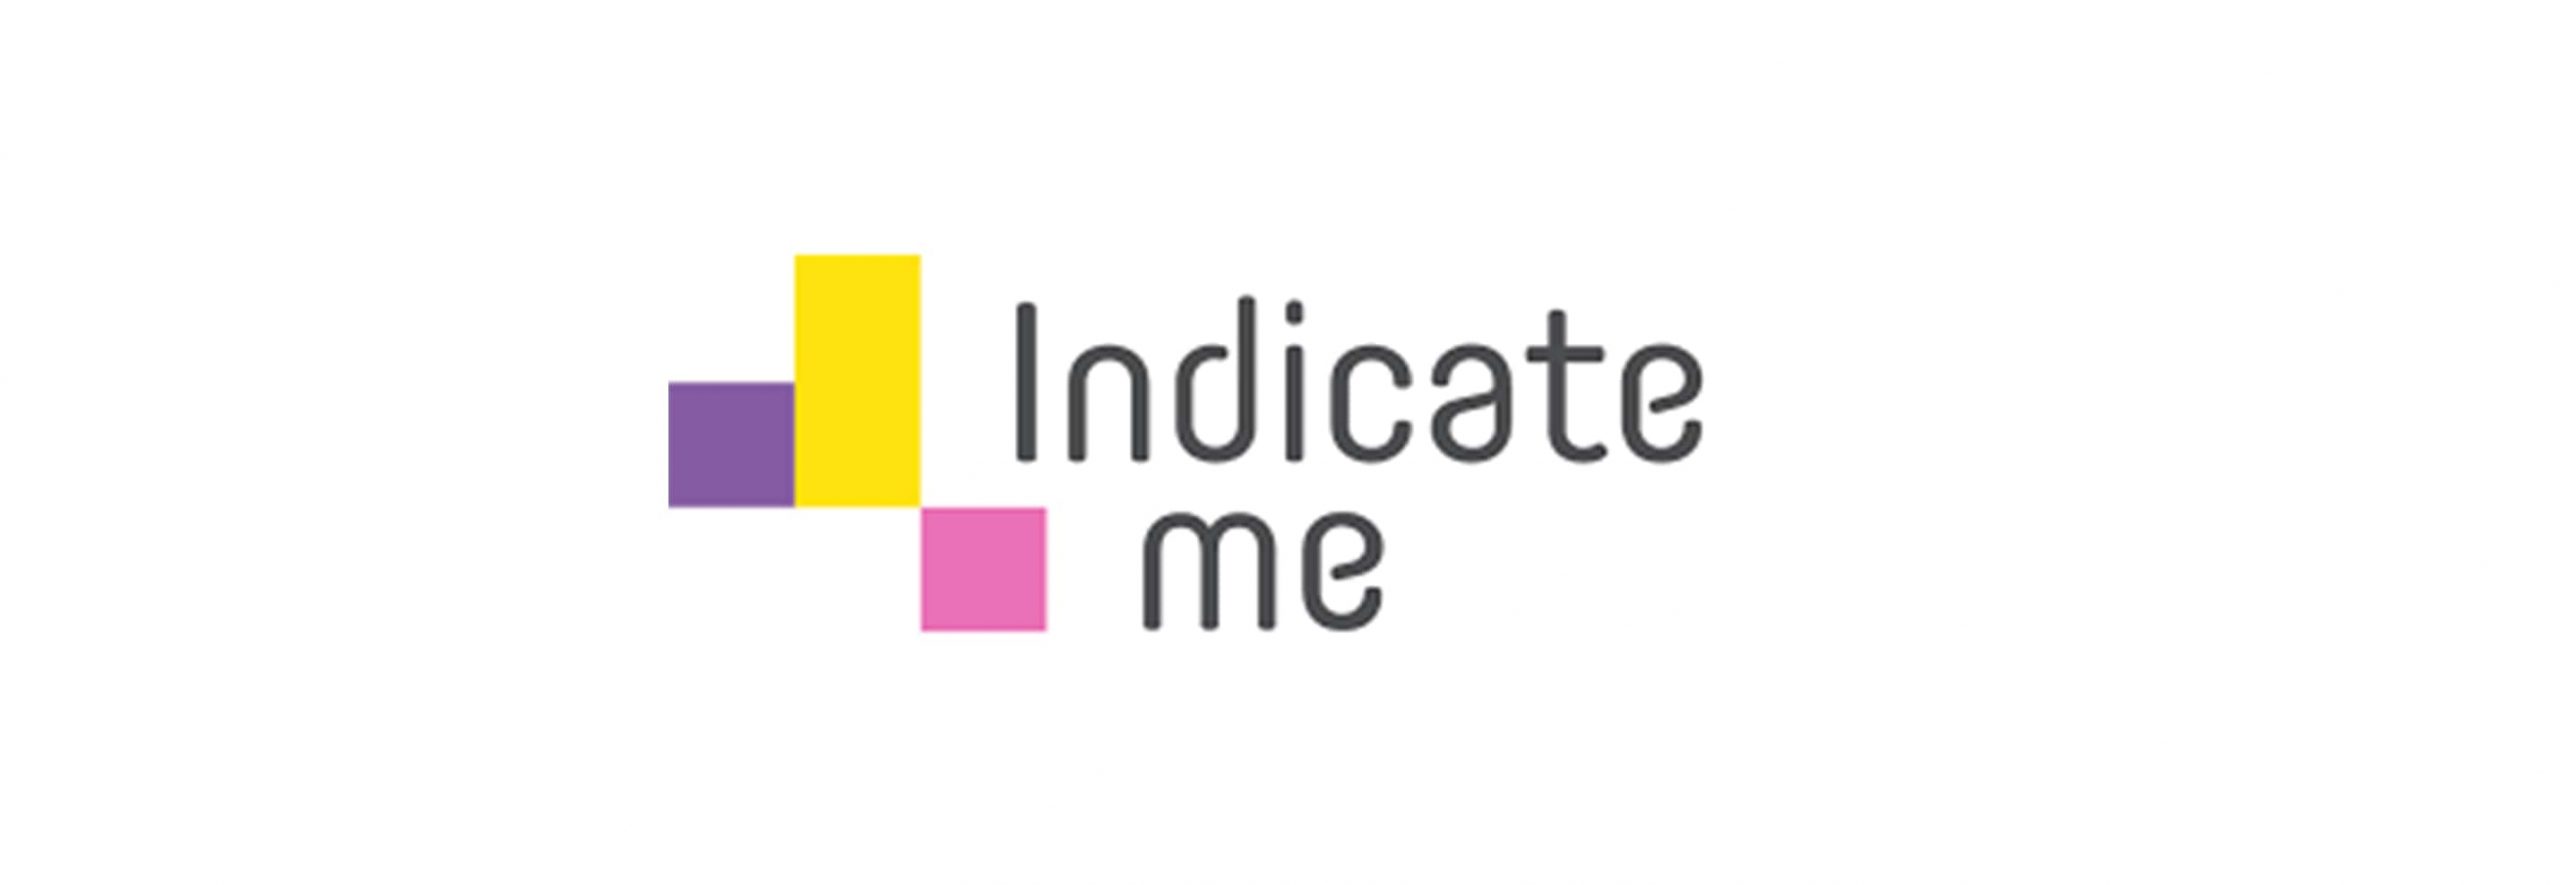 indicate me-min